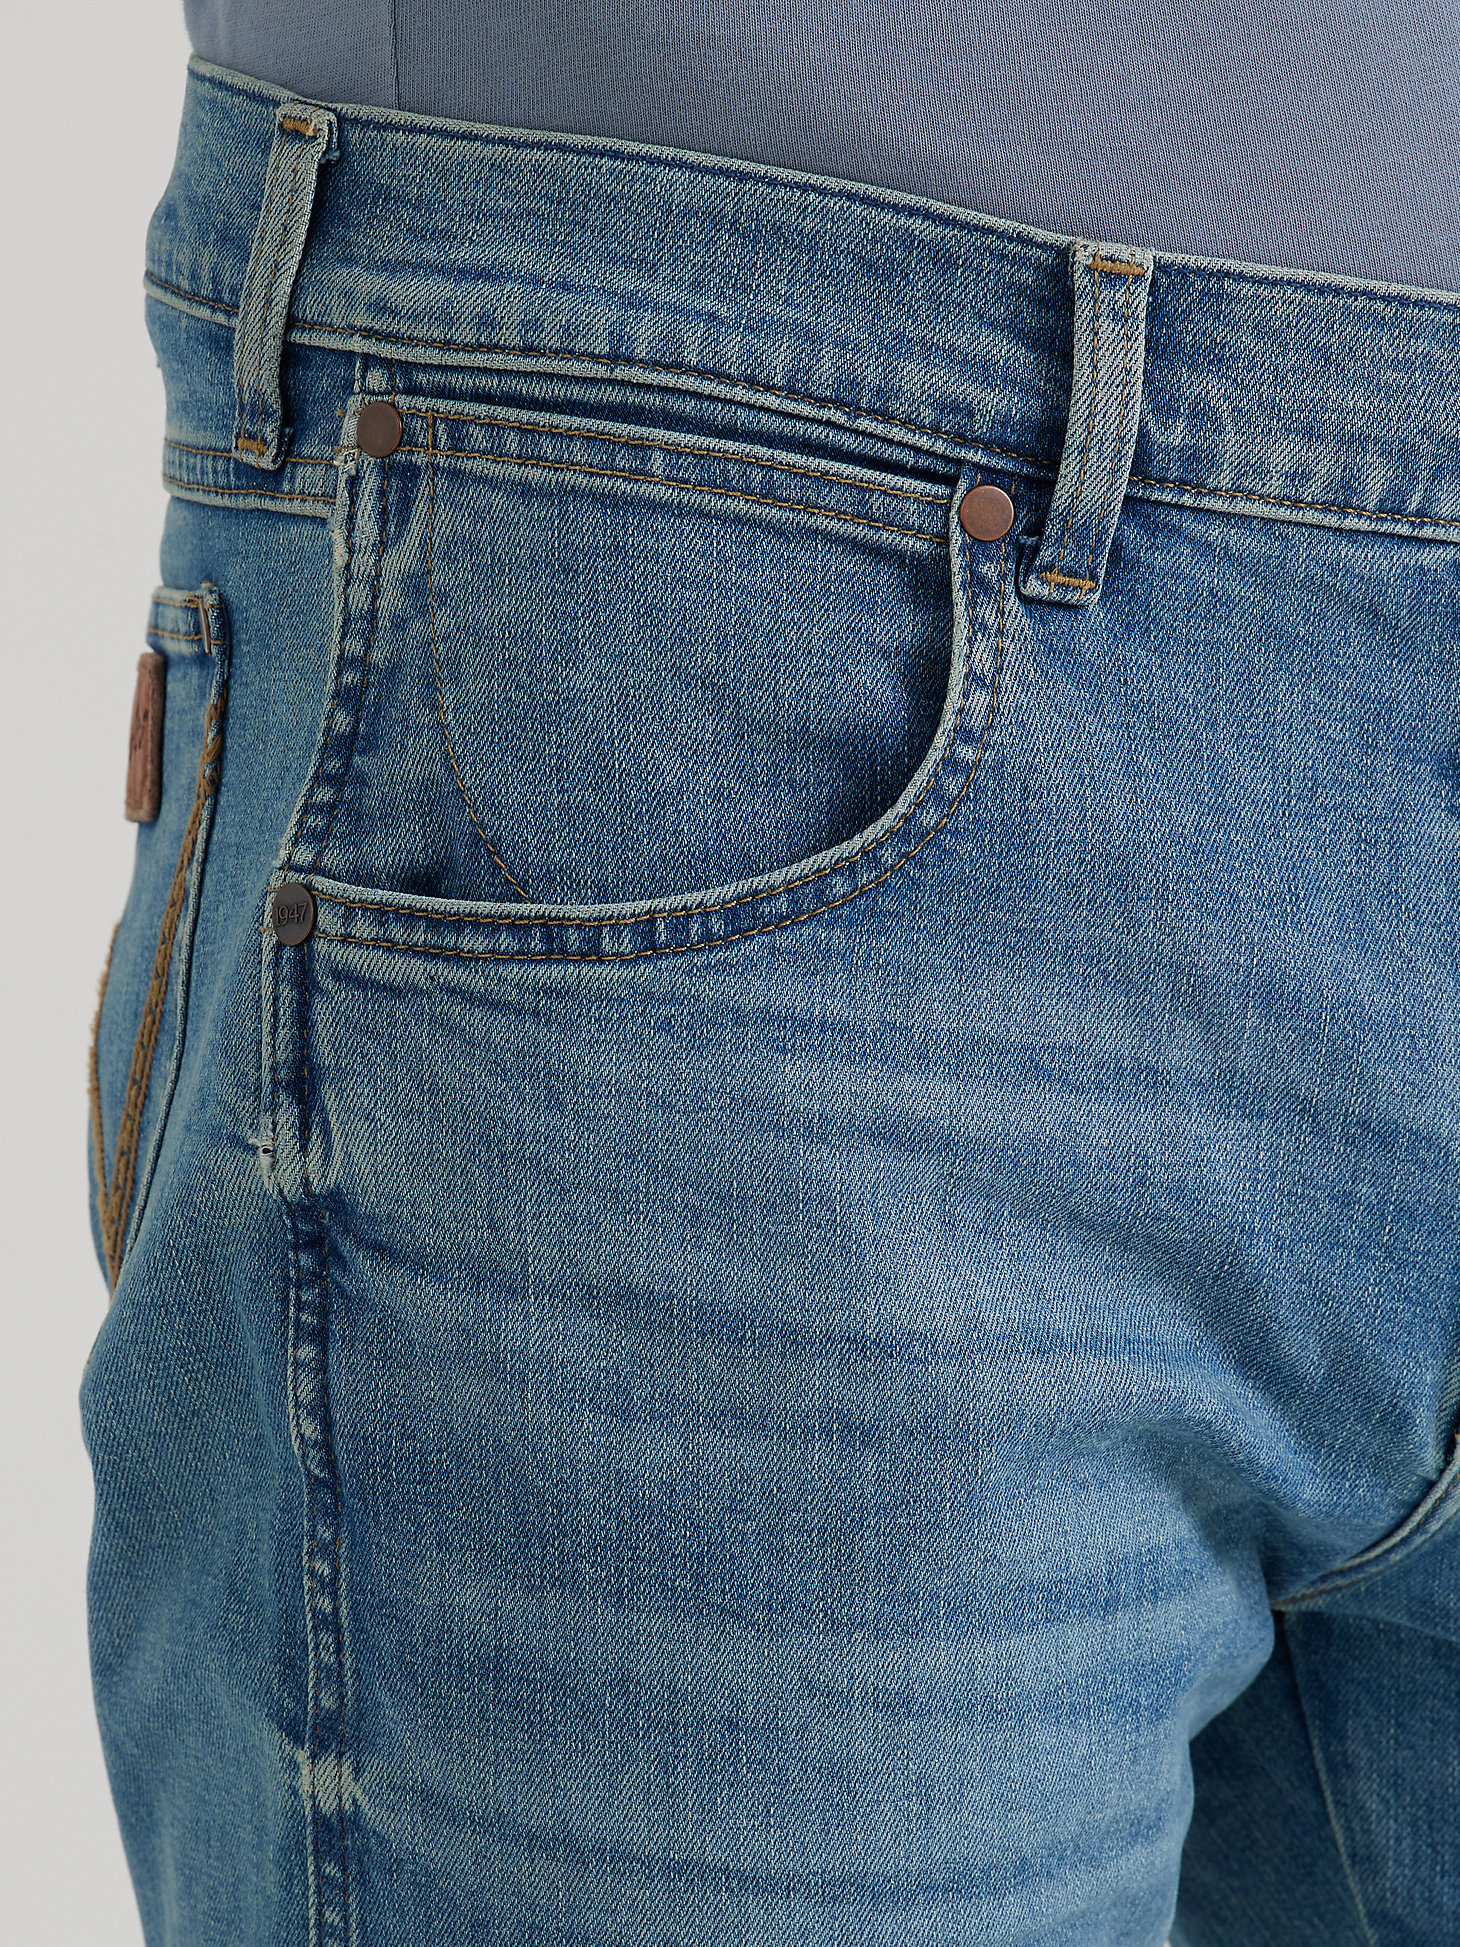 Men's Wrangler Retro® Slim Fit Bootcut Jean in Flintlock alternative view 6